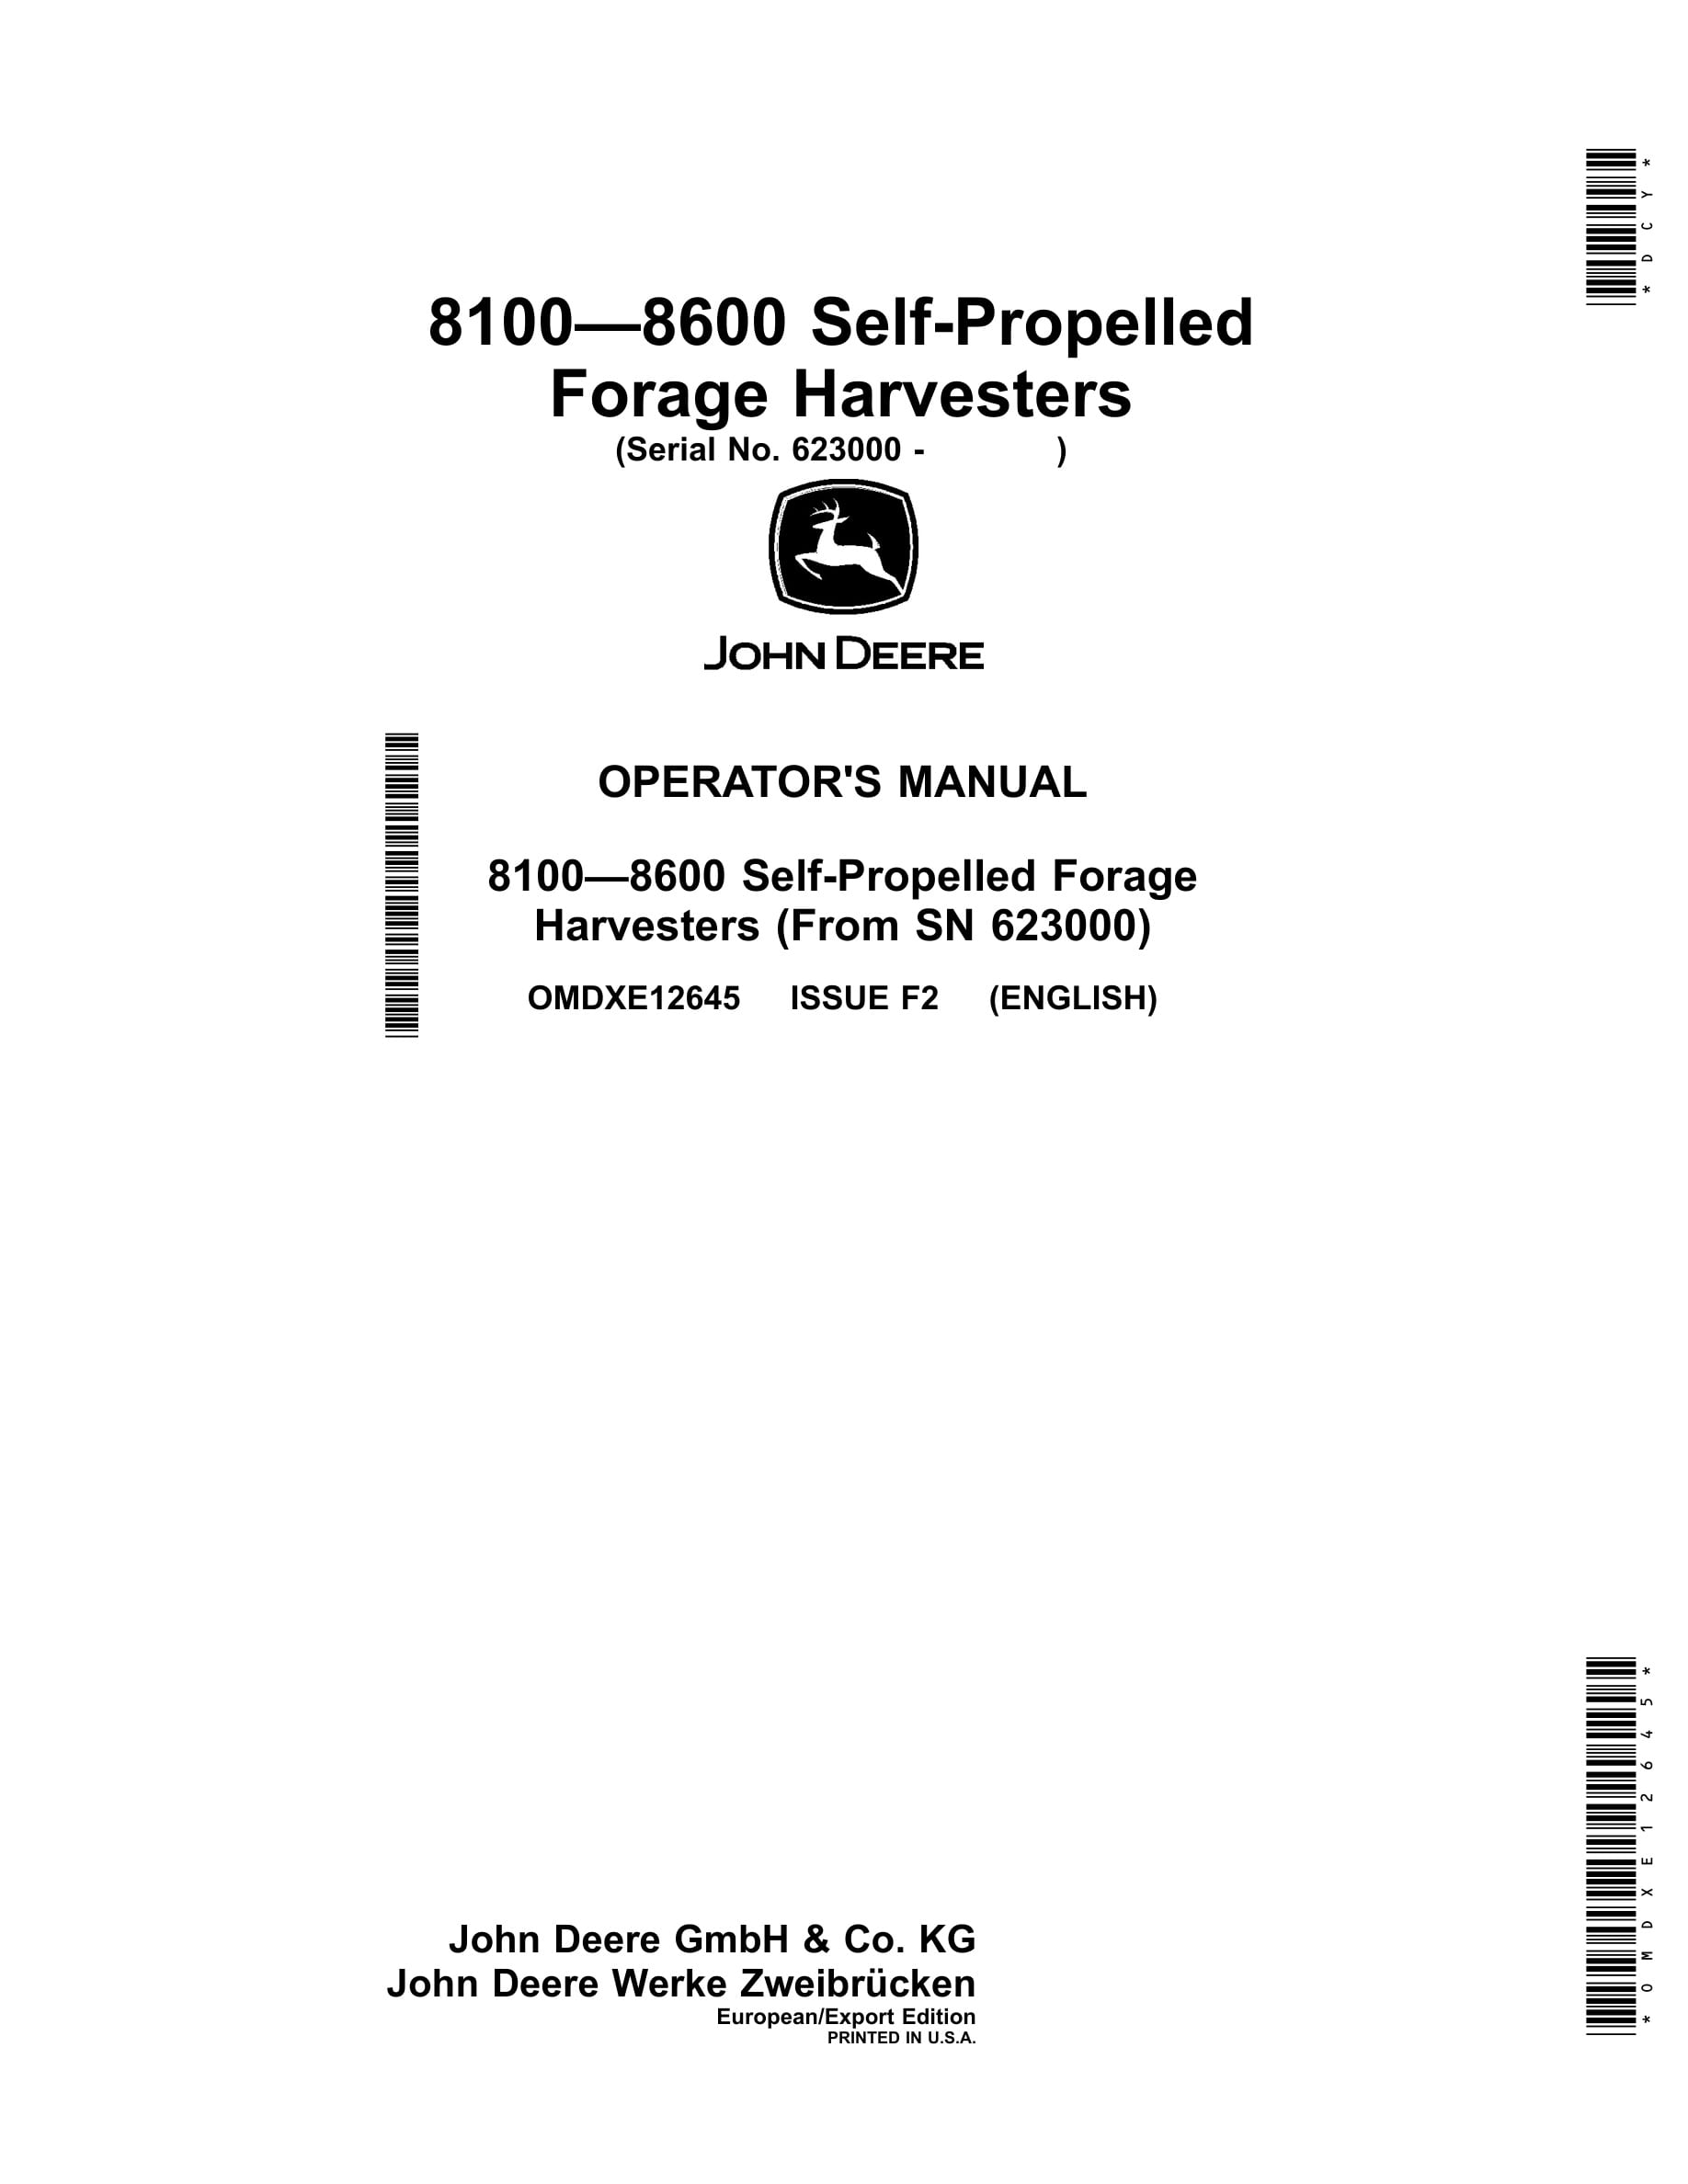 John Deere 8100 – 8600 Self-Propelled Forage Harvester Operator Manual OMDXE12645-1